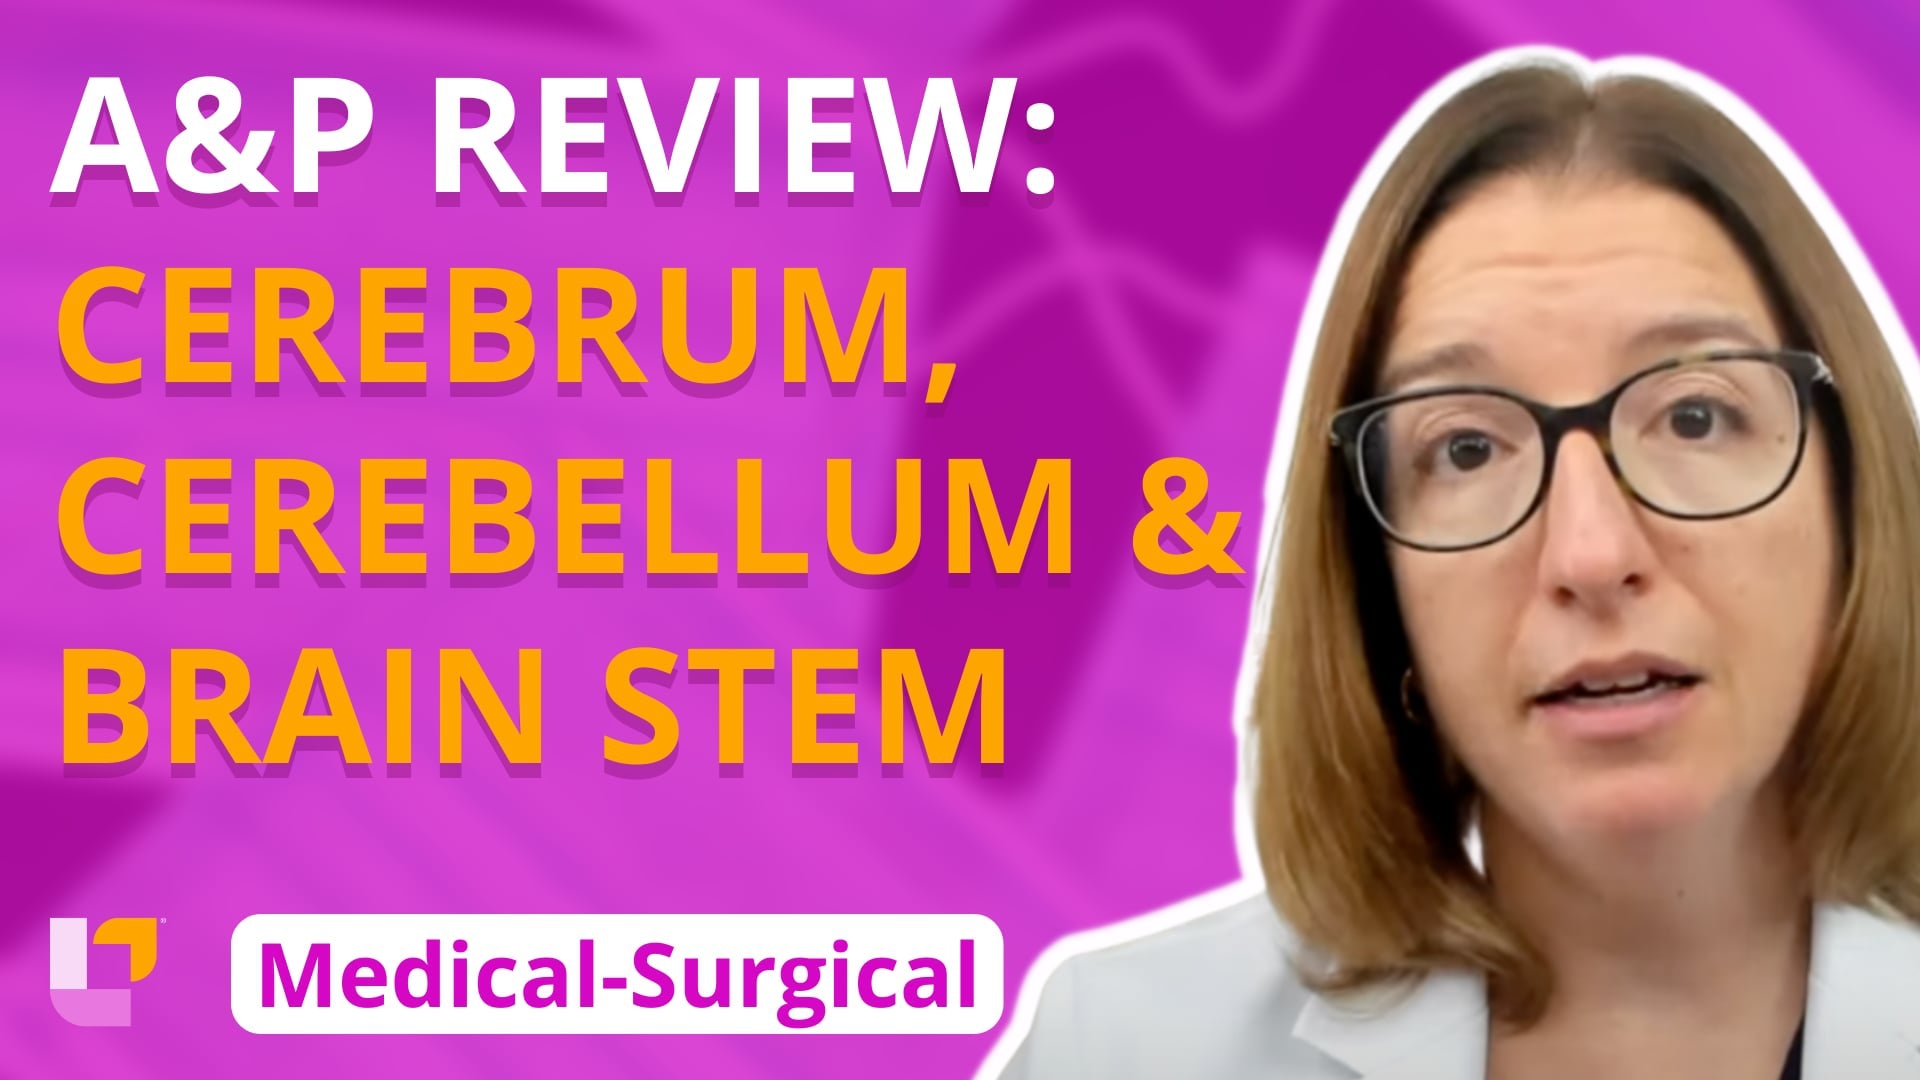 Med-Surg - Nervous System, part 2: A&P Review - Cerebrum, Cerebellum, Brain Stem - LevelUpRN